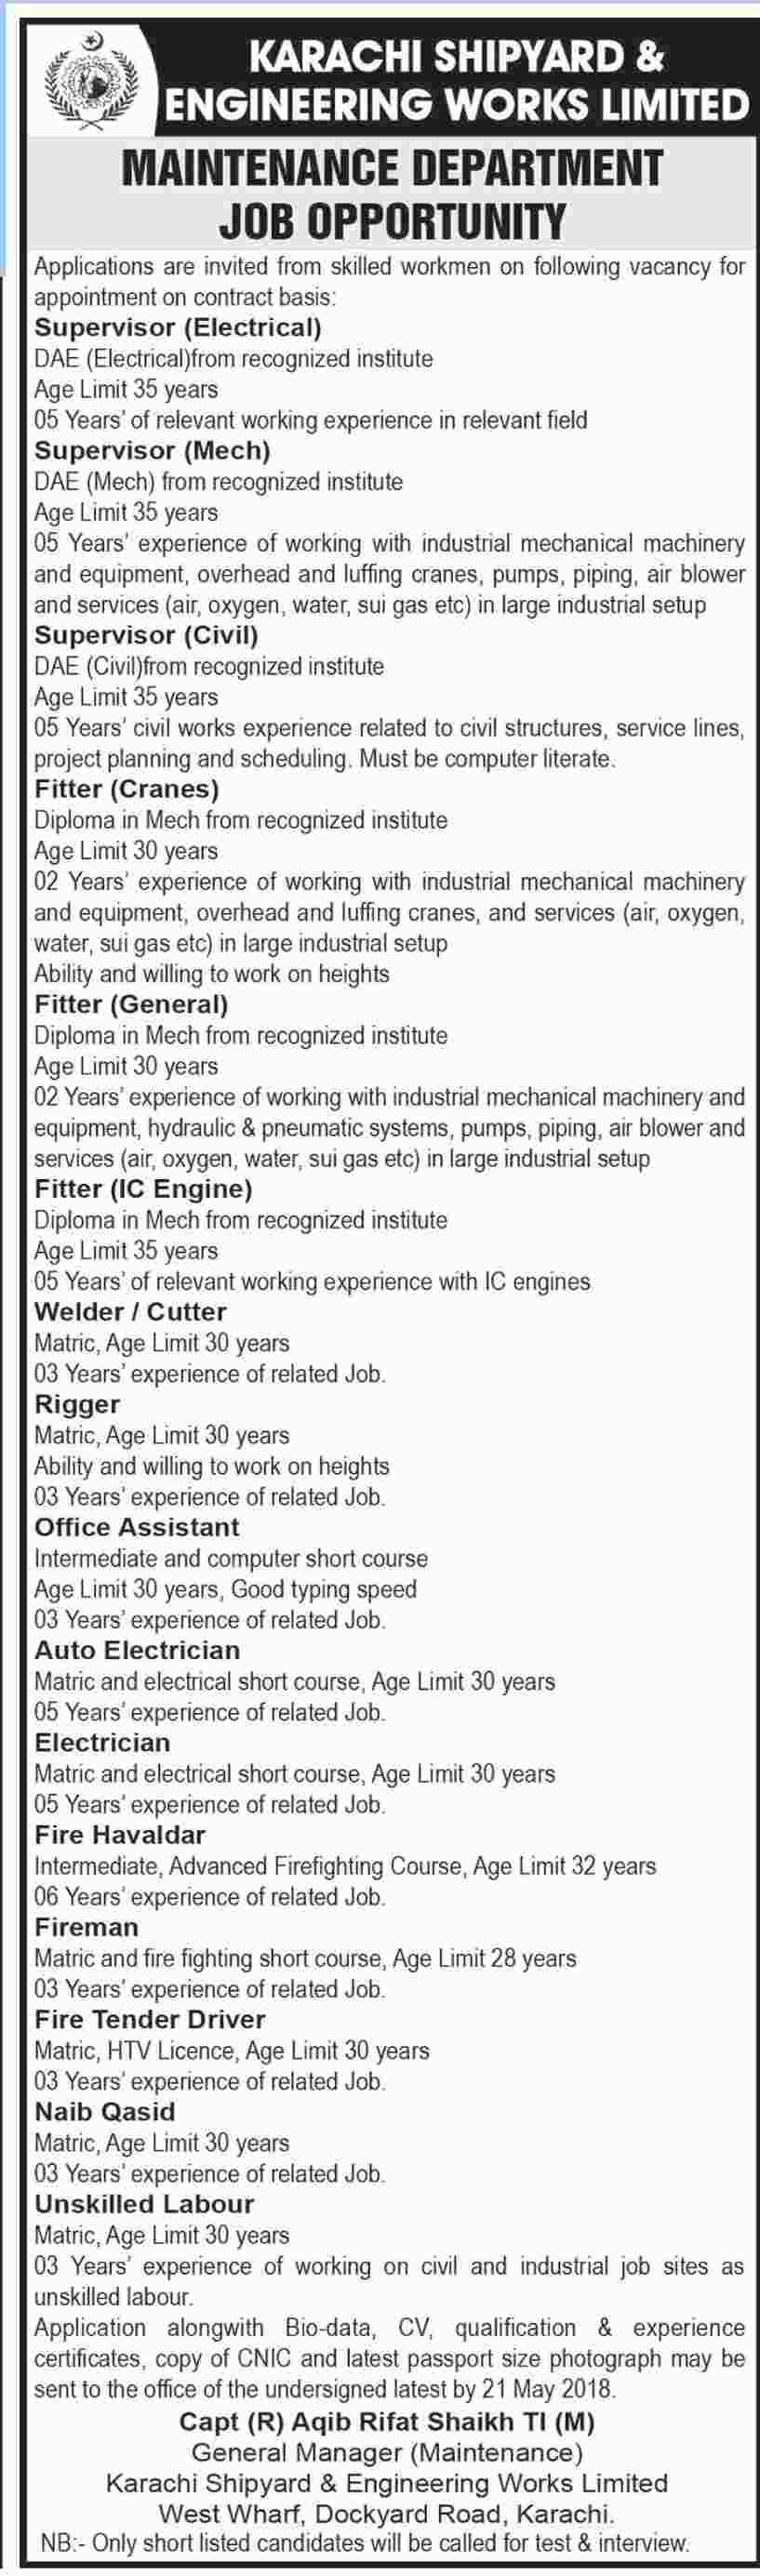 Jobs in Karachi Shipyard & Engineering Works Limited 06 May 2018